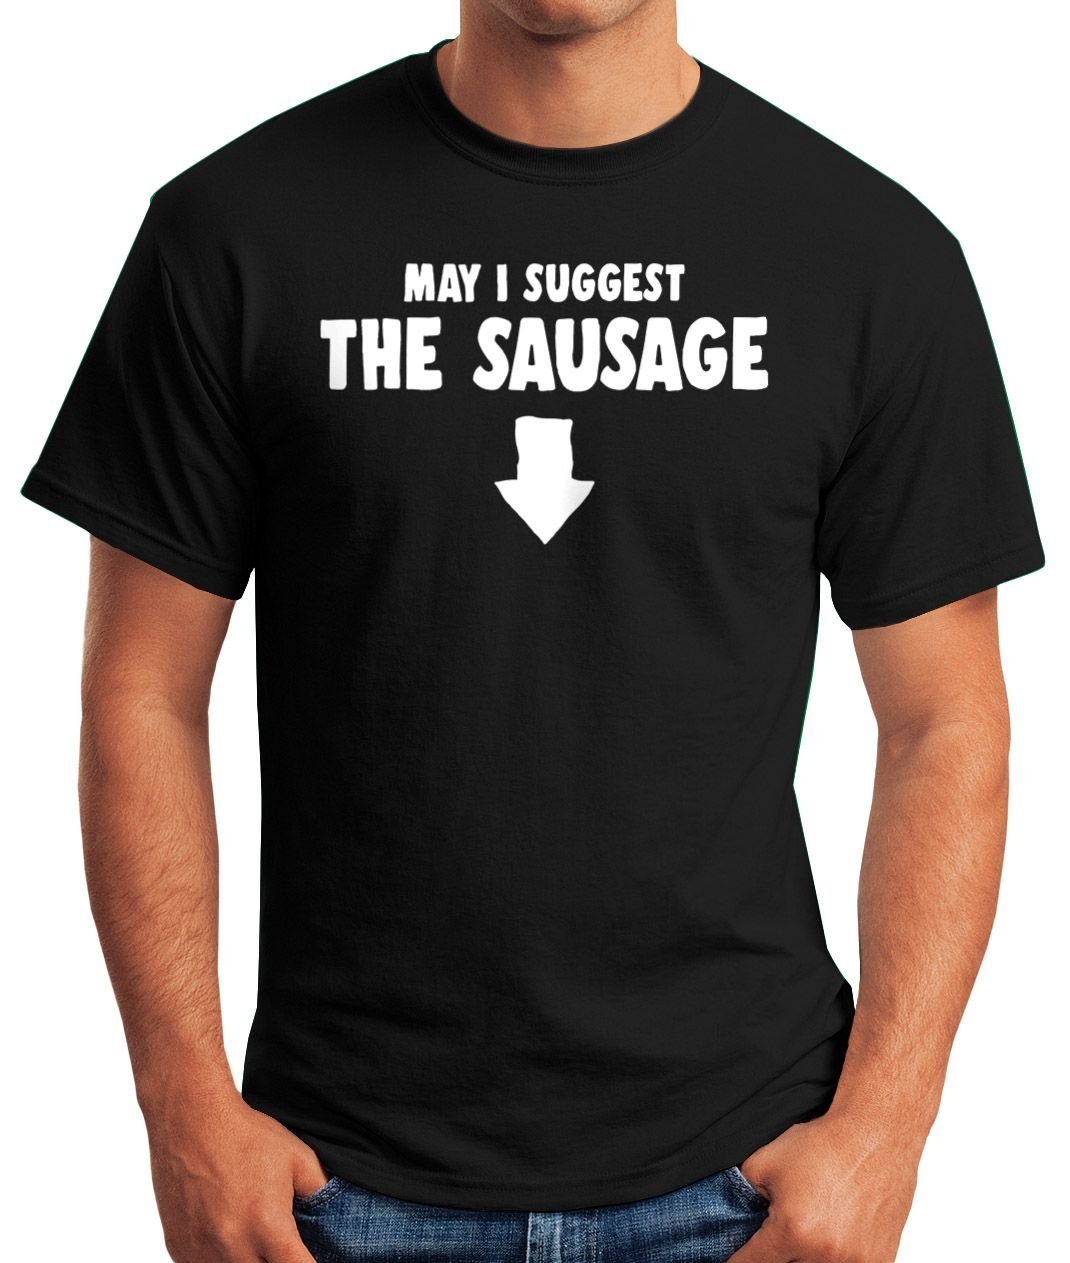 Sausage T-Shirt Herren suggest Moonworks® Print lustig the May I Fun-Shirt MoonWorks mit Spruch Print-Shirt